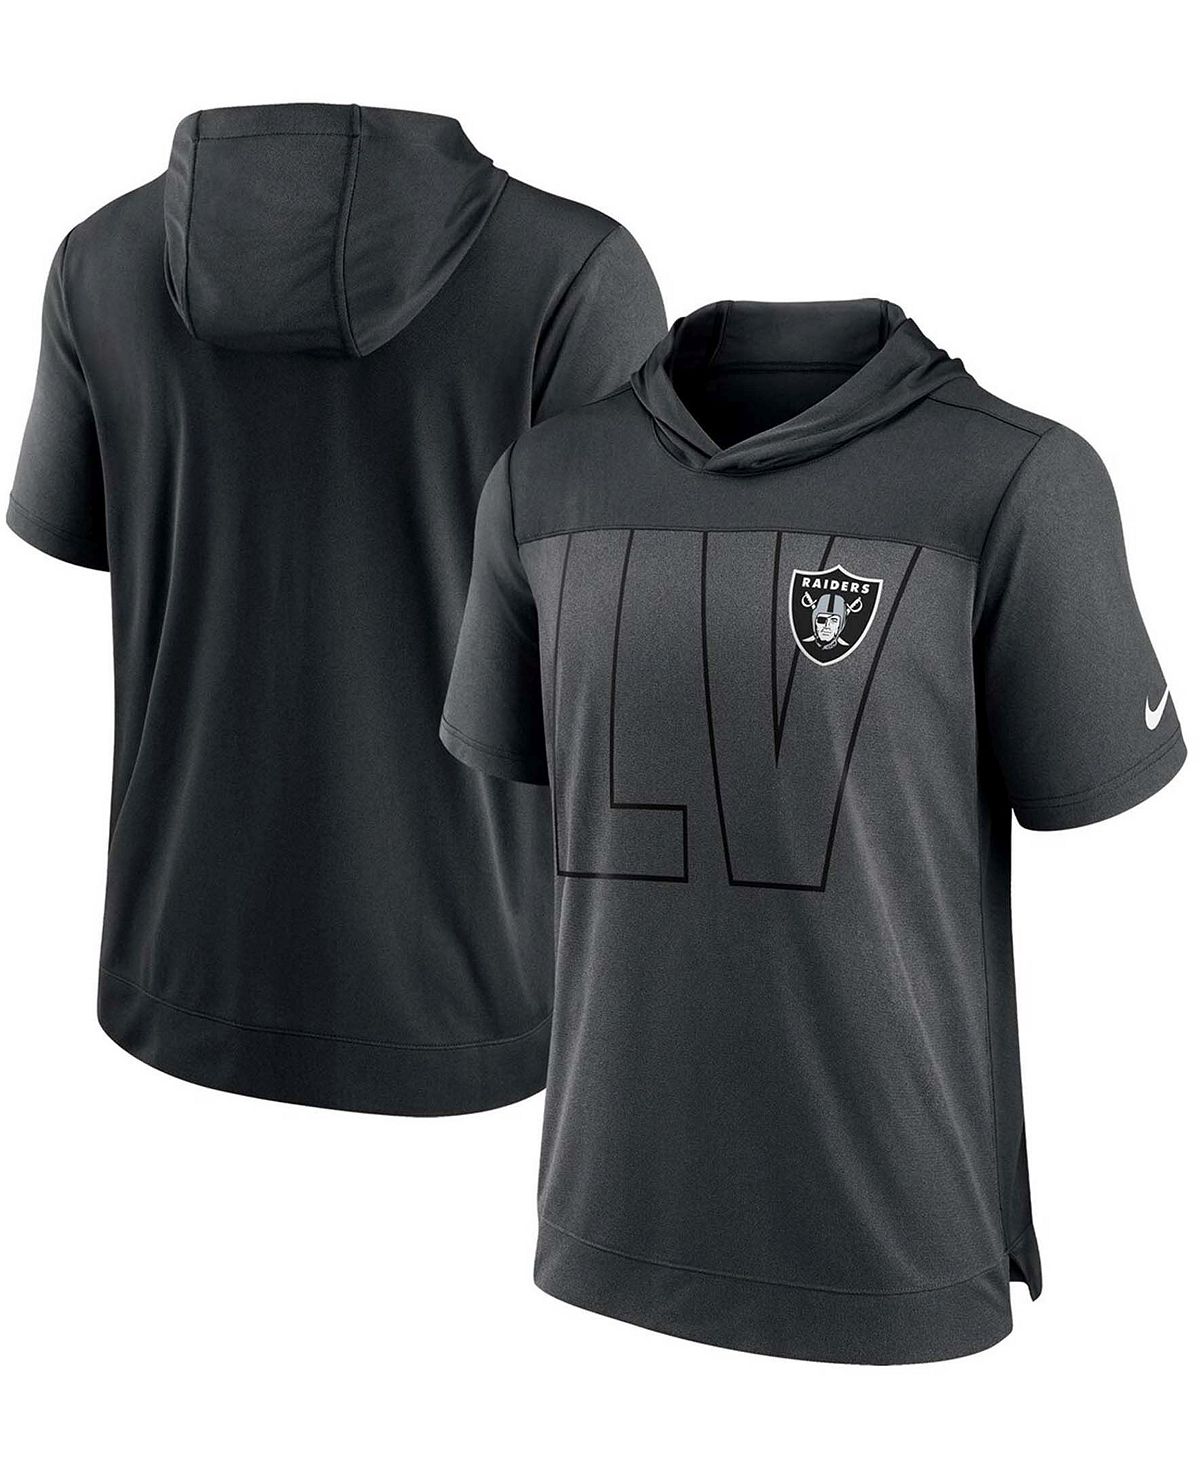 Мужская темно-серая, черная футболка с капюшоном las vegas raiders performance Nike, мульти футболки print bar las vegas